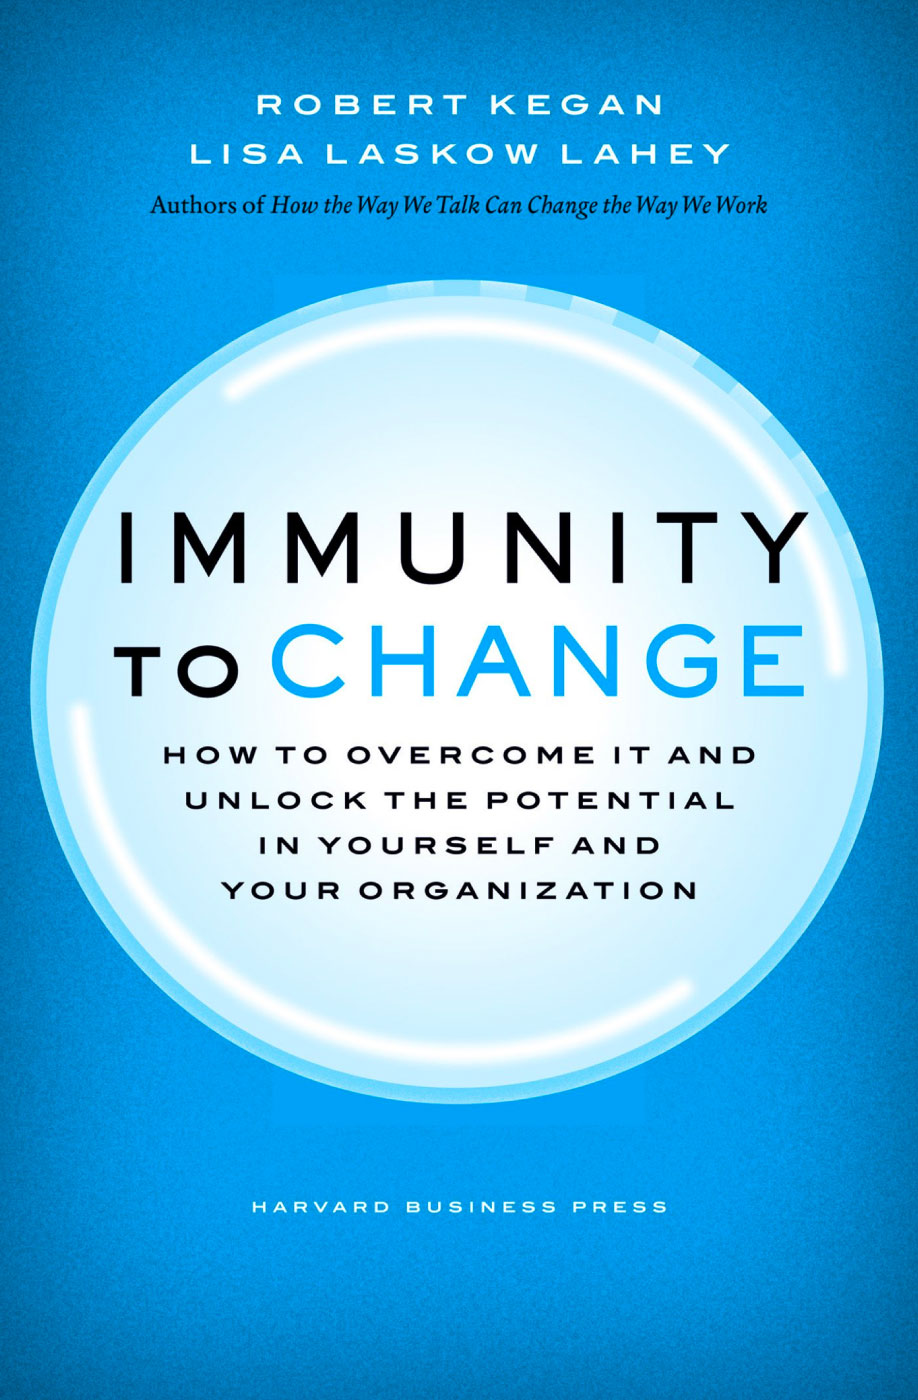 Immunity to Change by Lisa Lahey and Robert Kegan